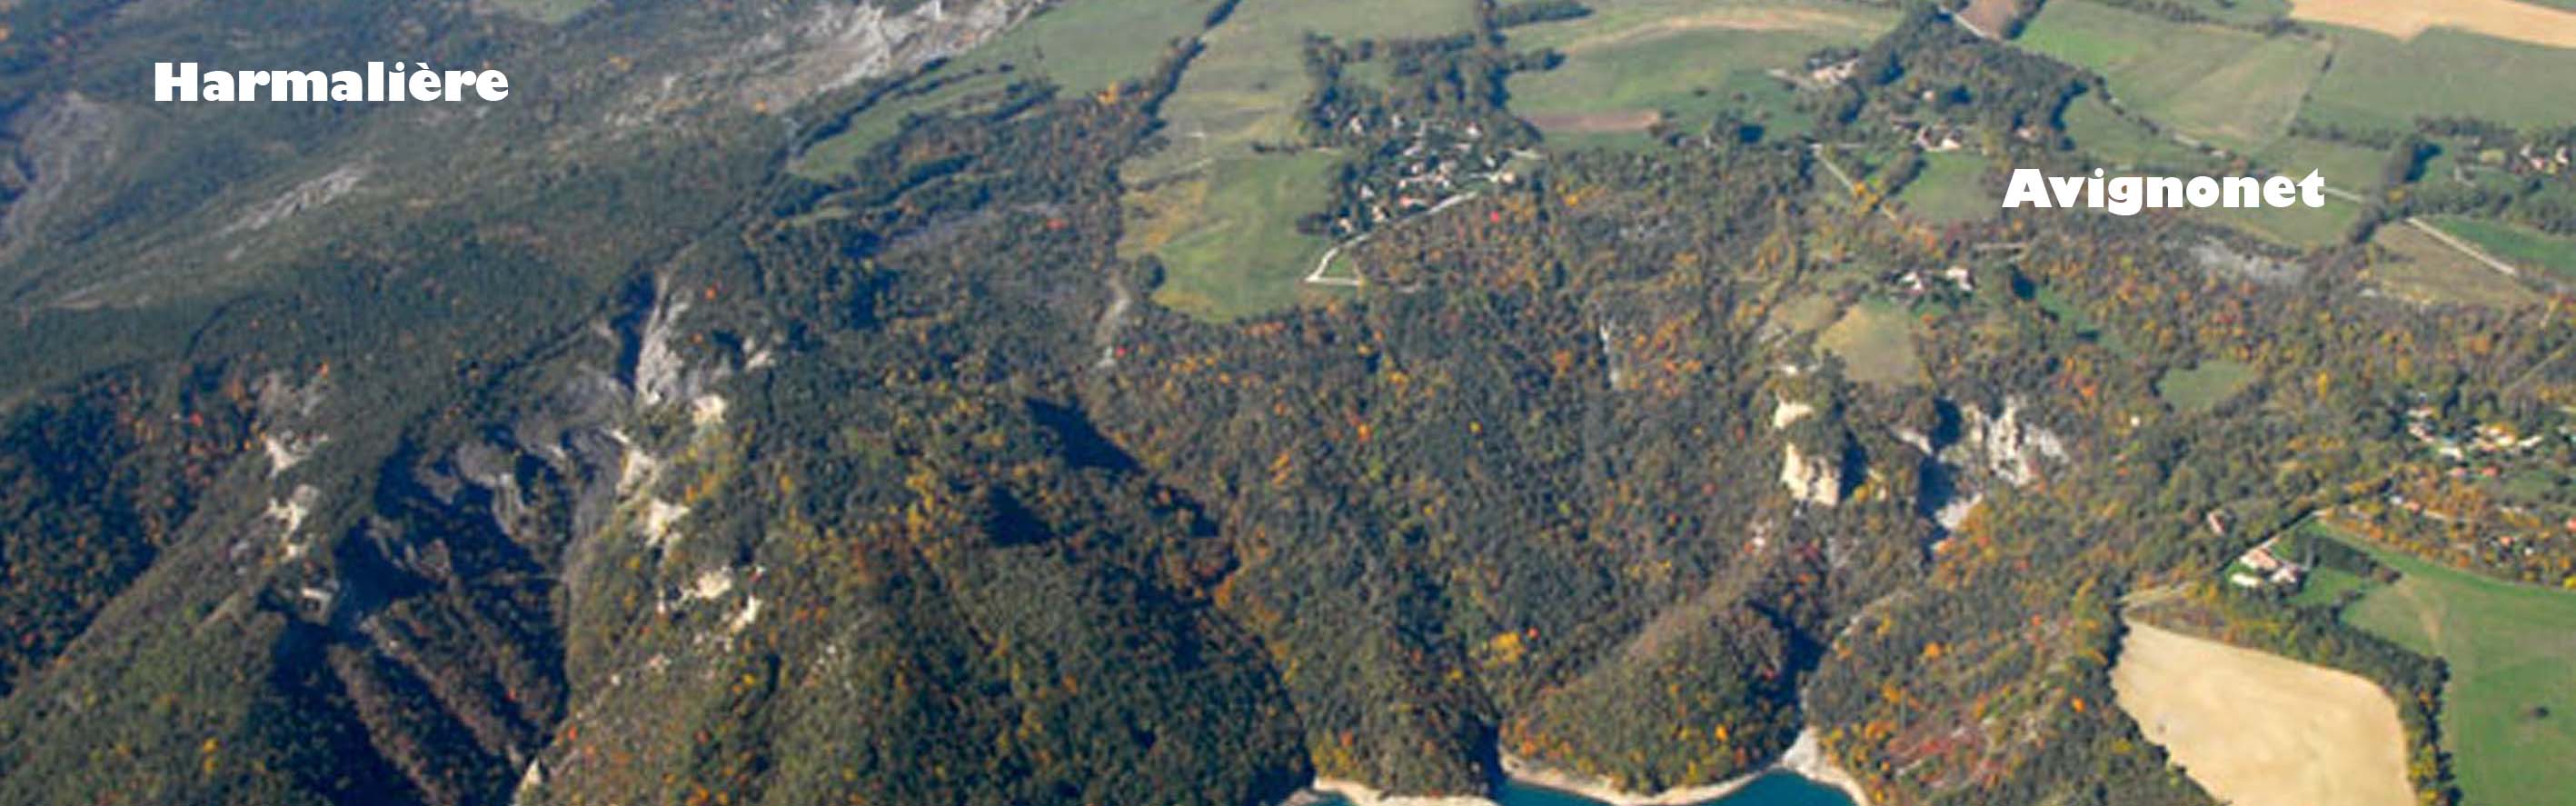 Avignonet/Harmalière landslides: aerial view in 2010